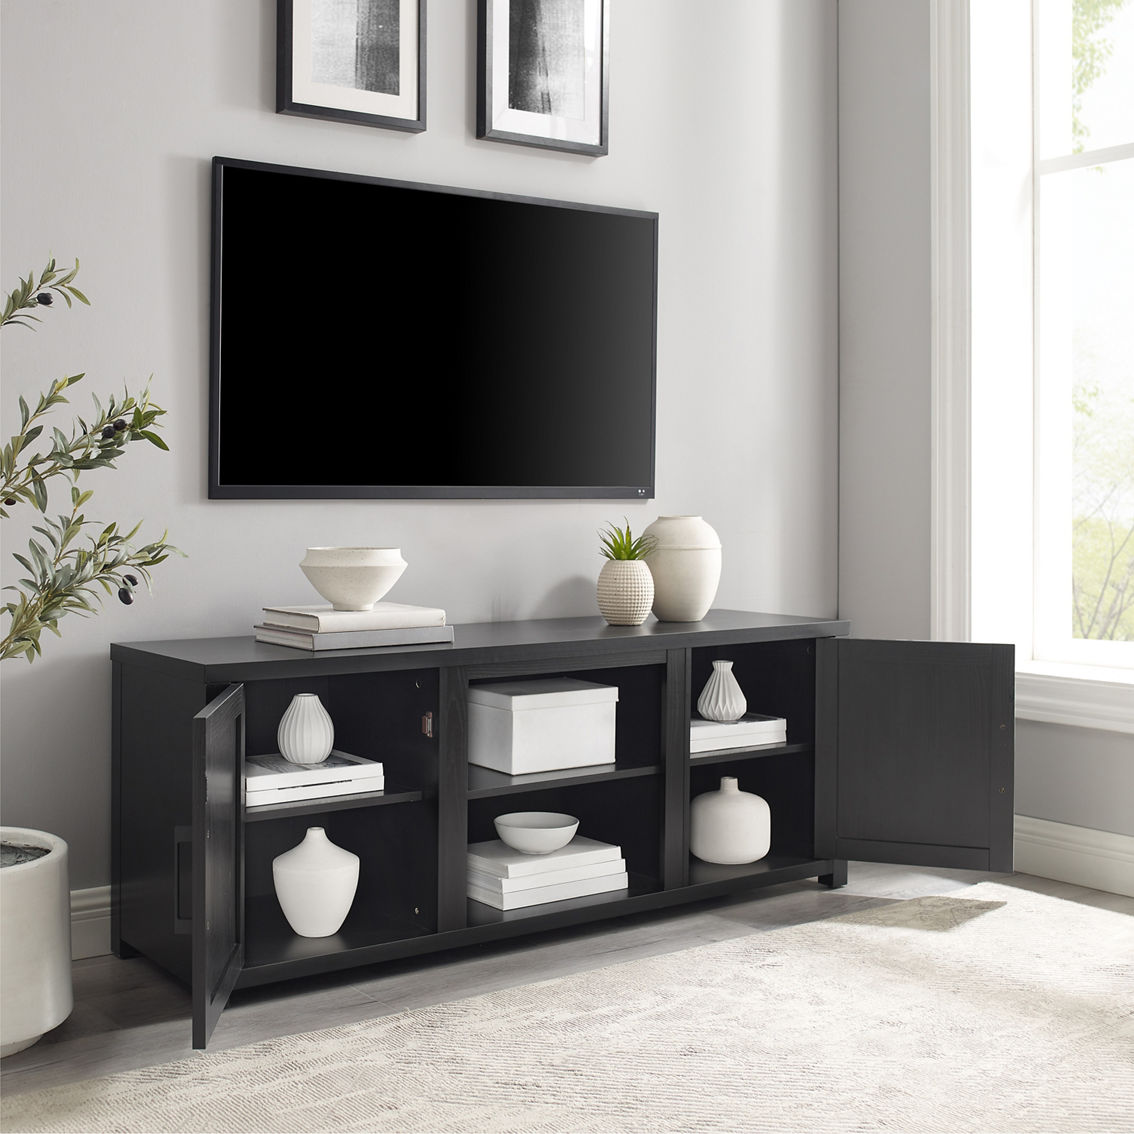 Crosley Furniture Gordon Low Profile Tv Stand 58 in. - Image 3 of 7